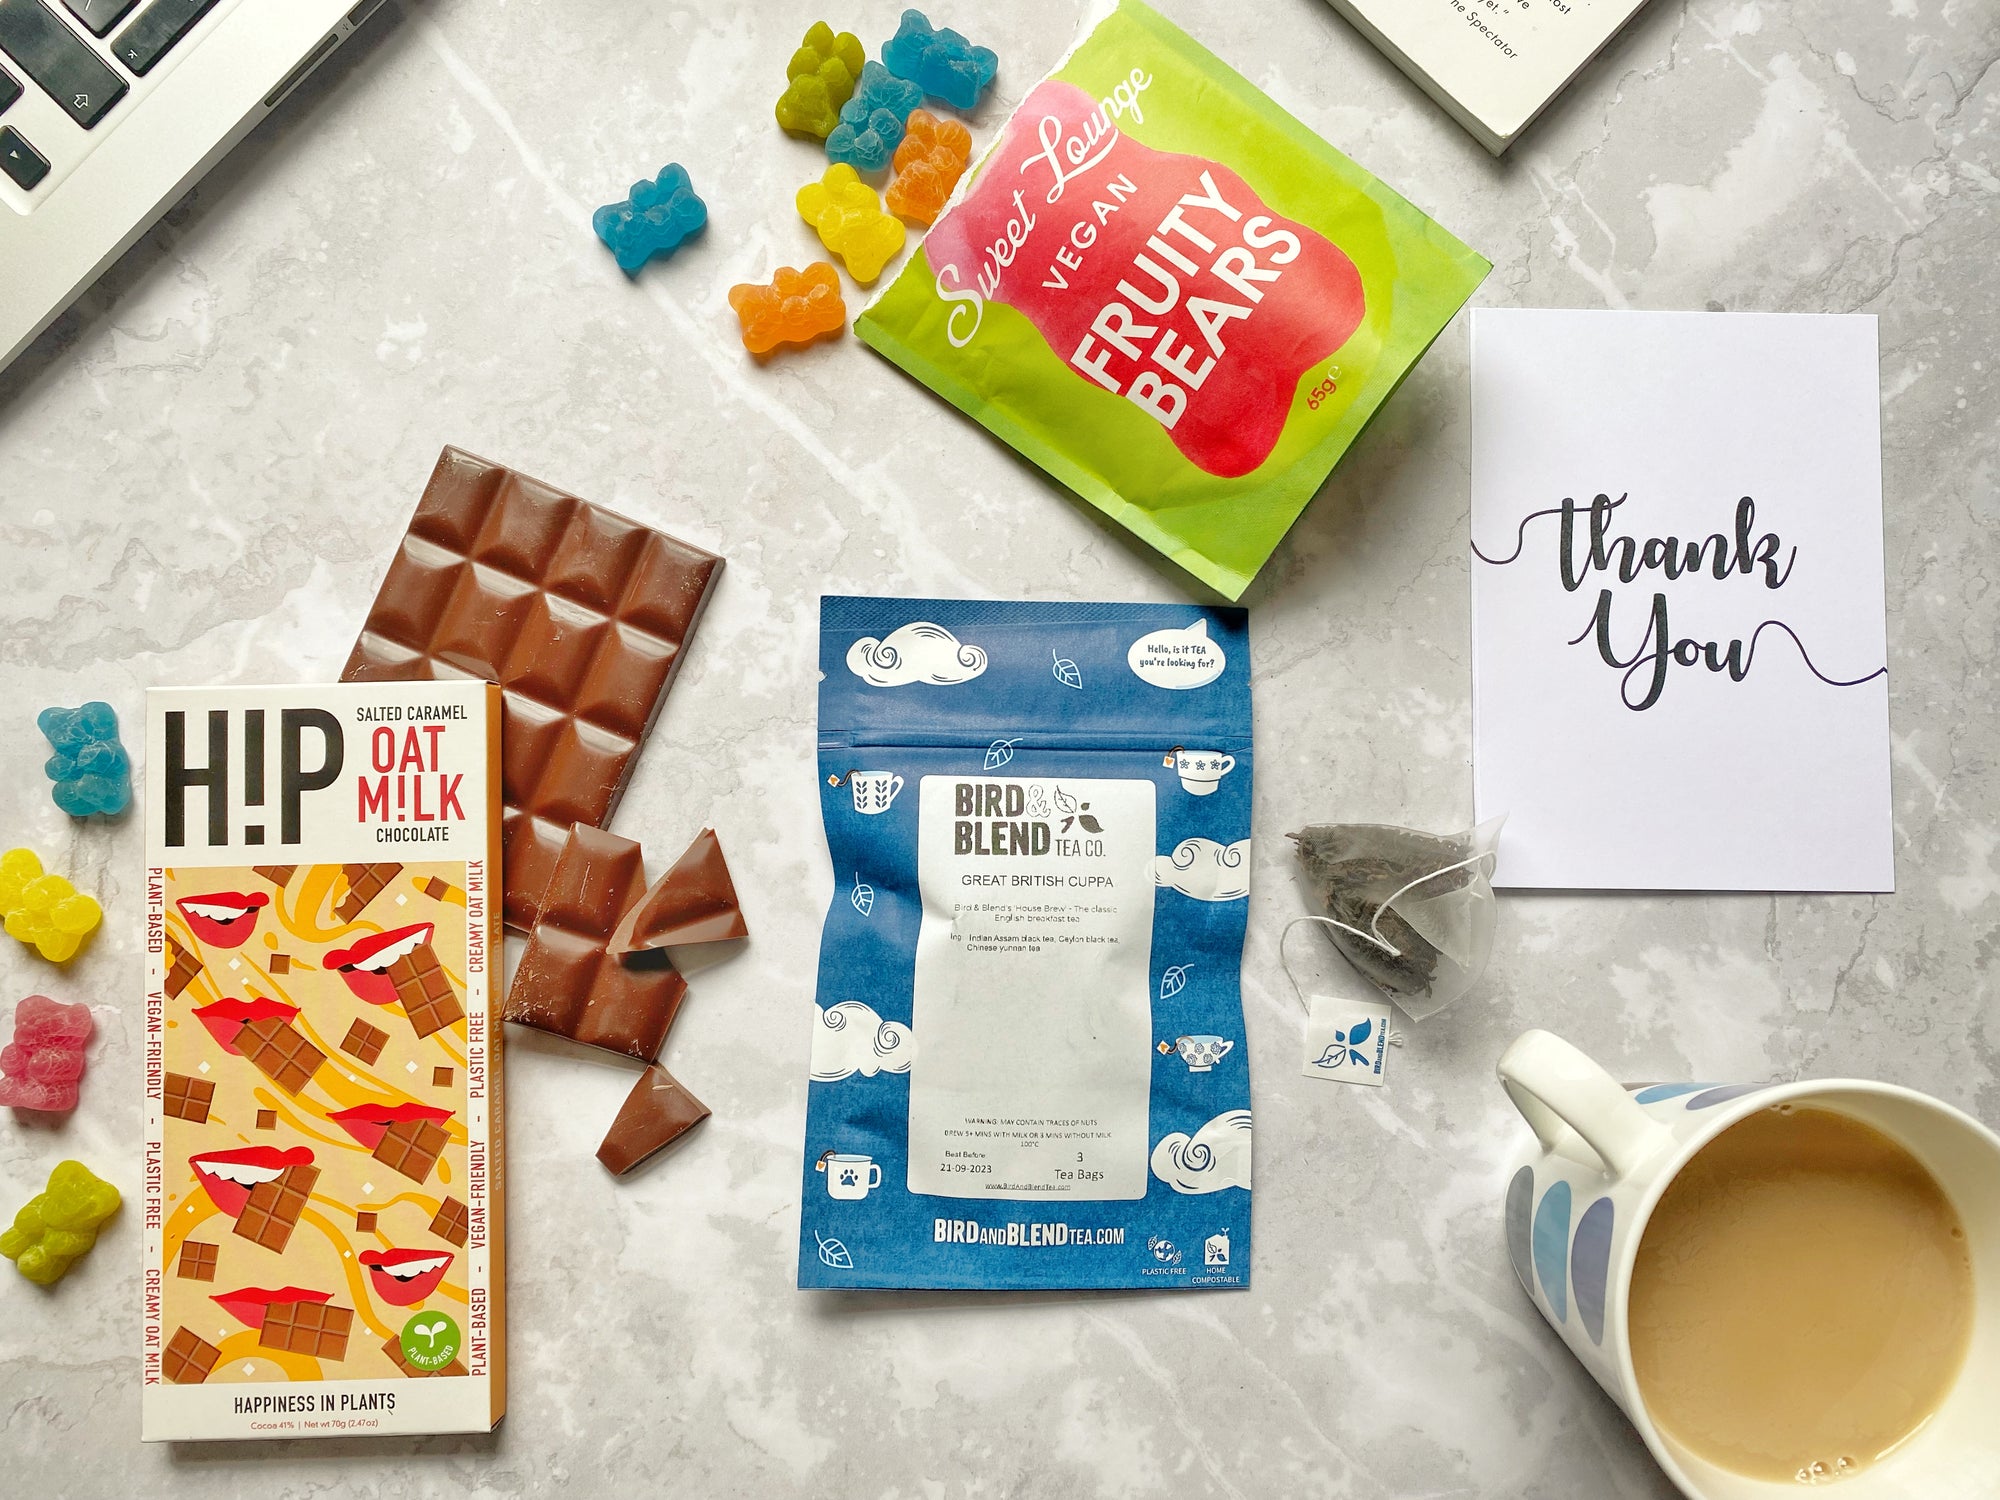 Tea Break Treat Letterbox Gift Hamper Vegan Gluten-Free Dairy-Free